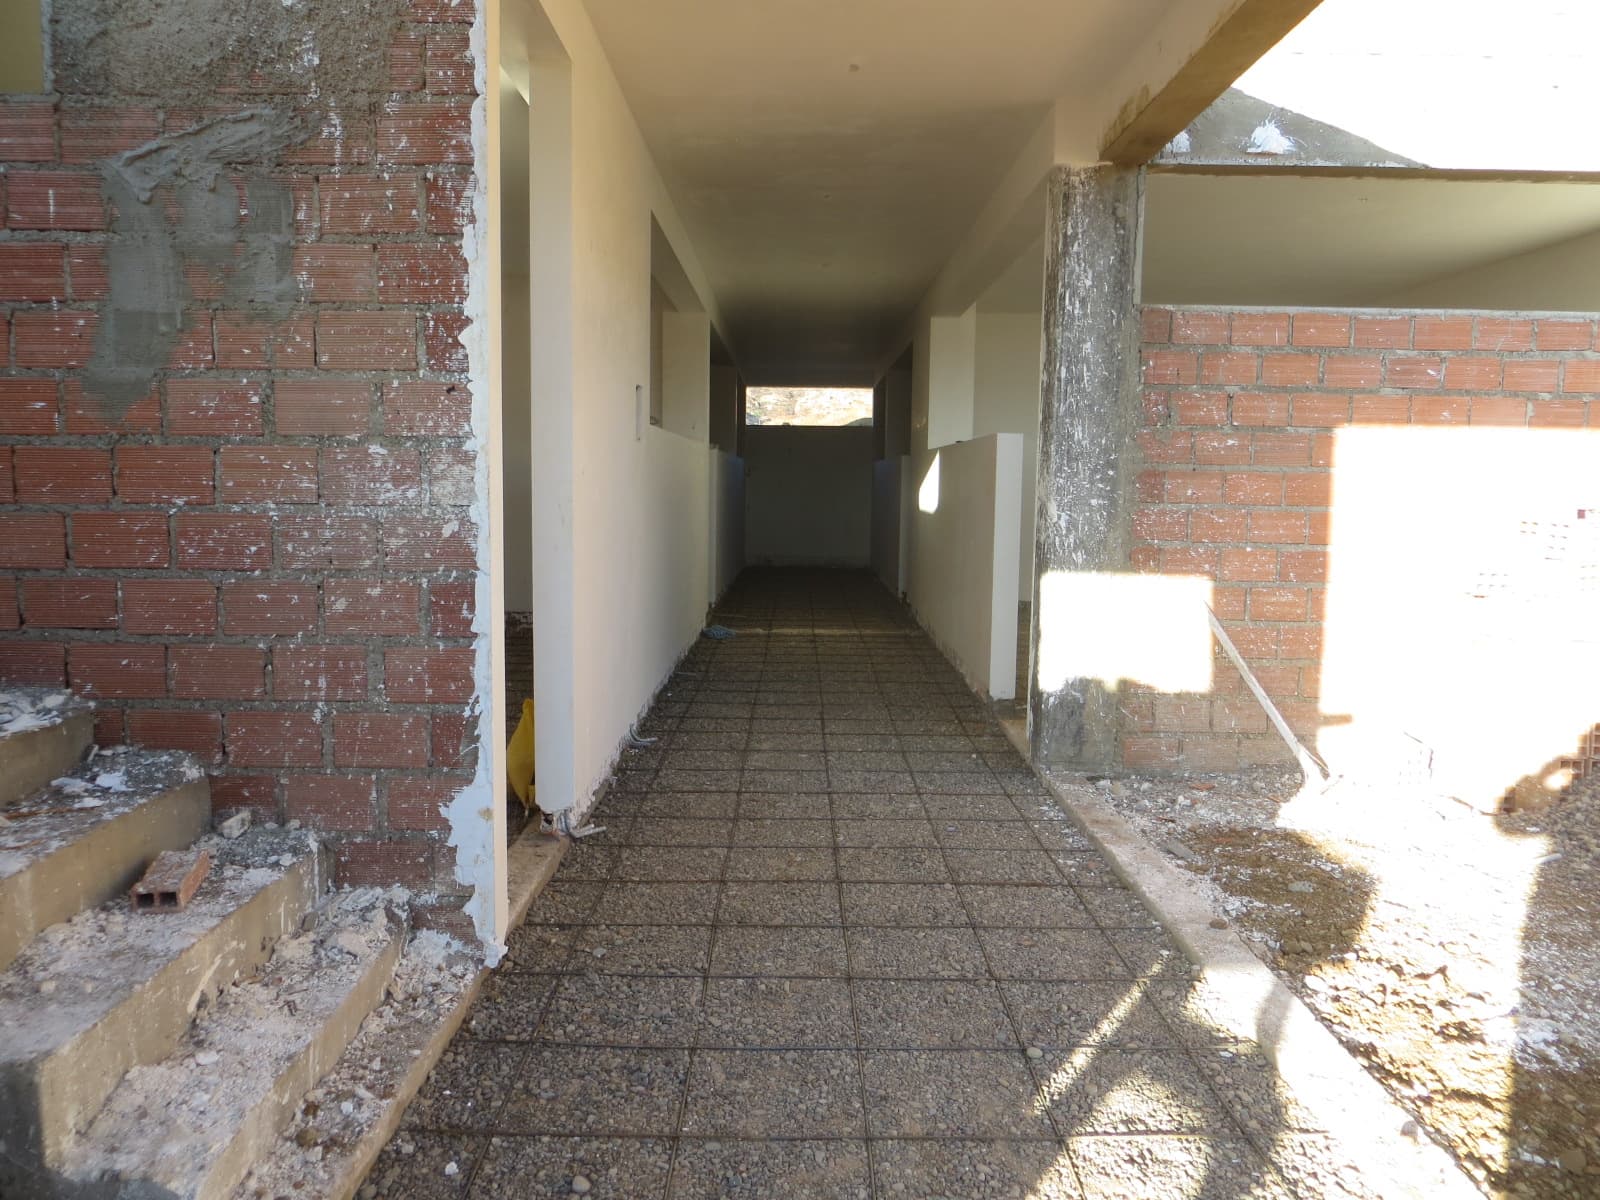 The main corridor to the classroom.